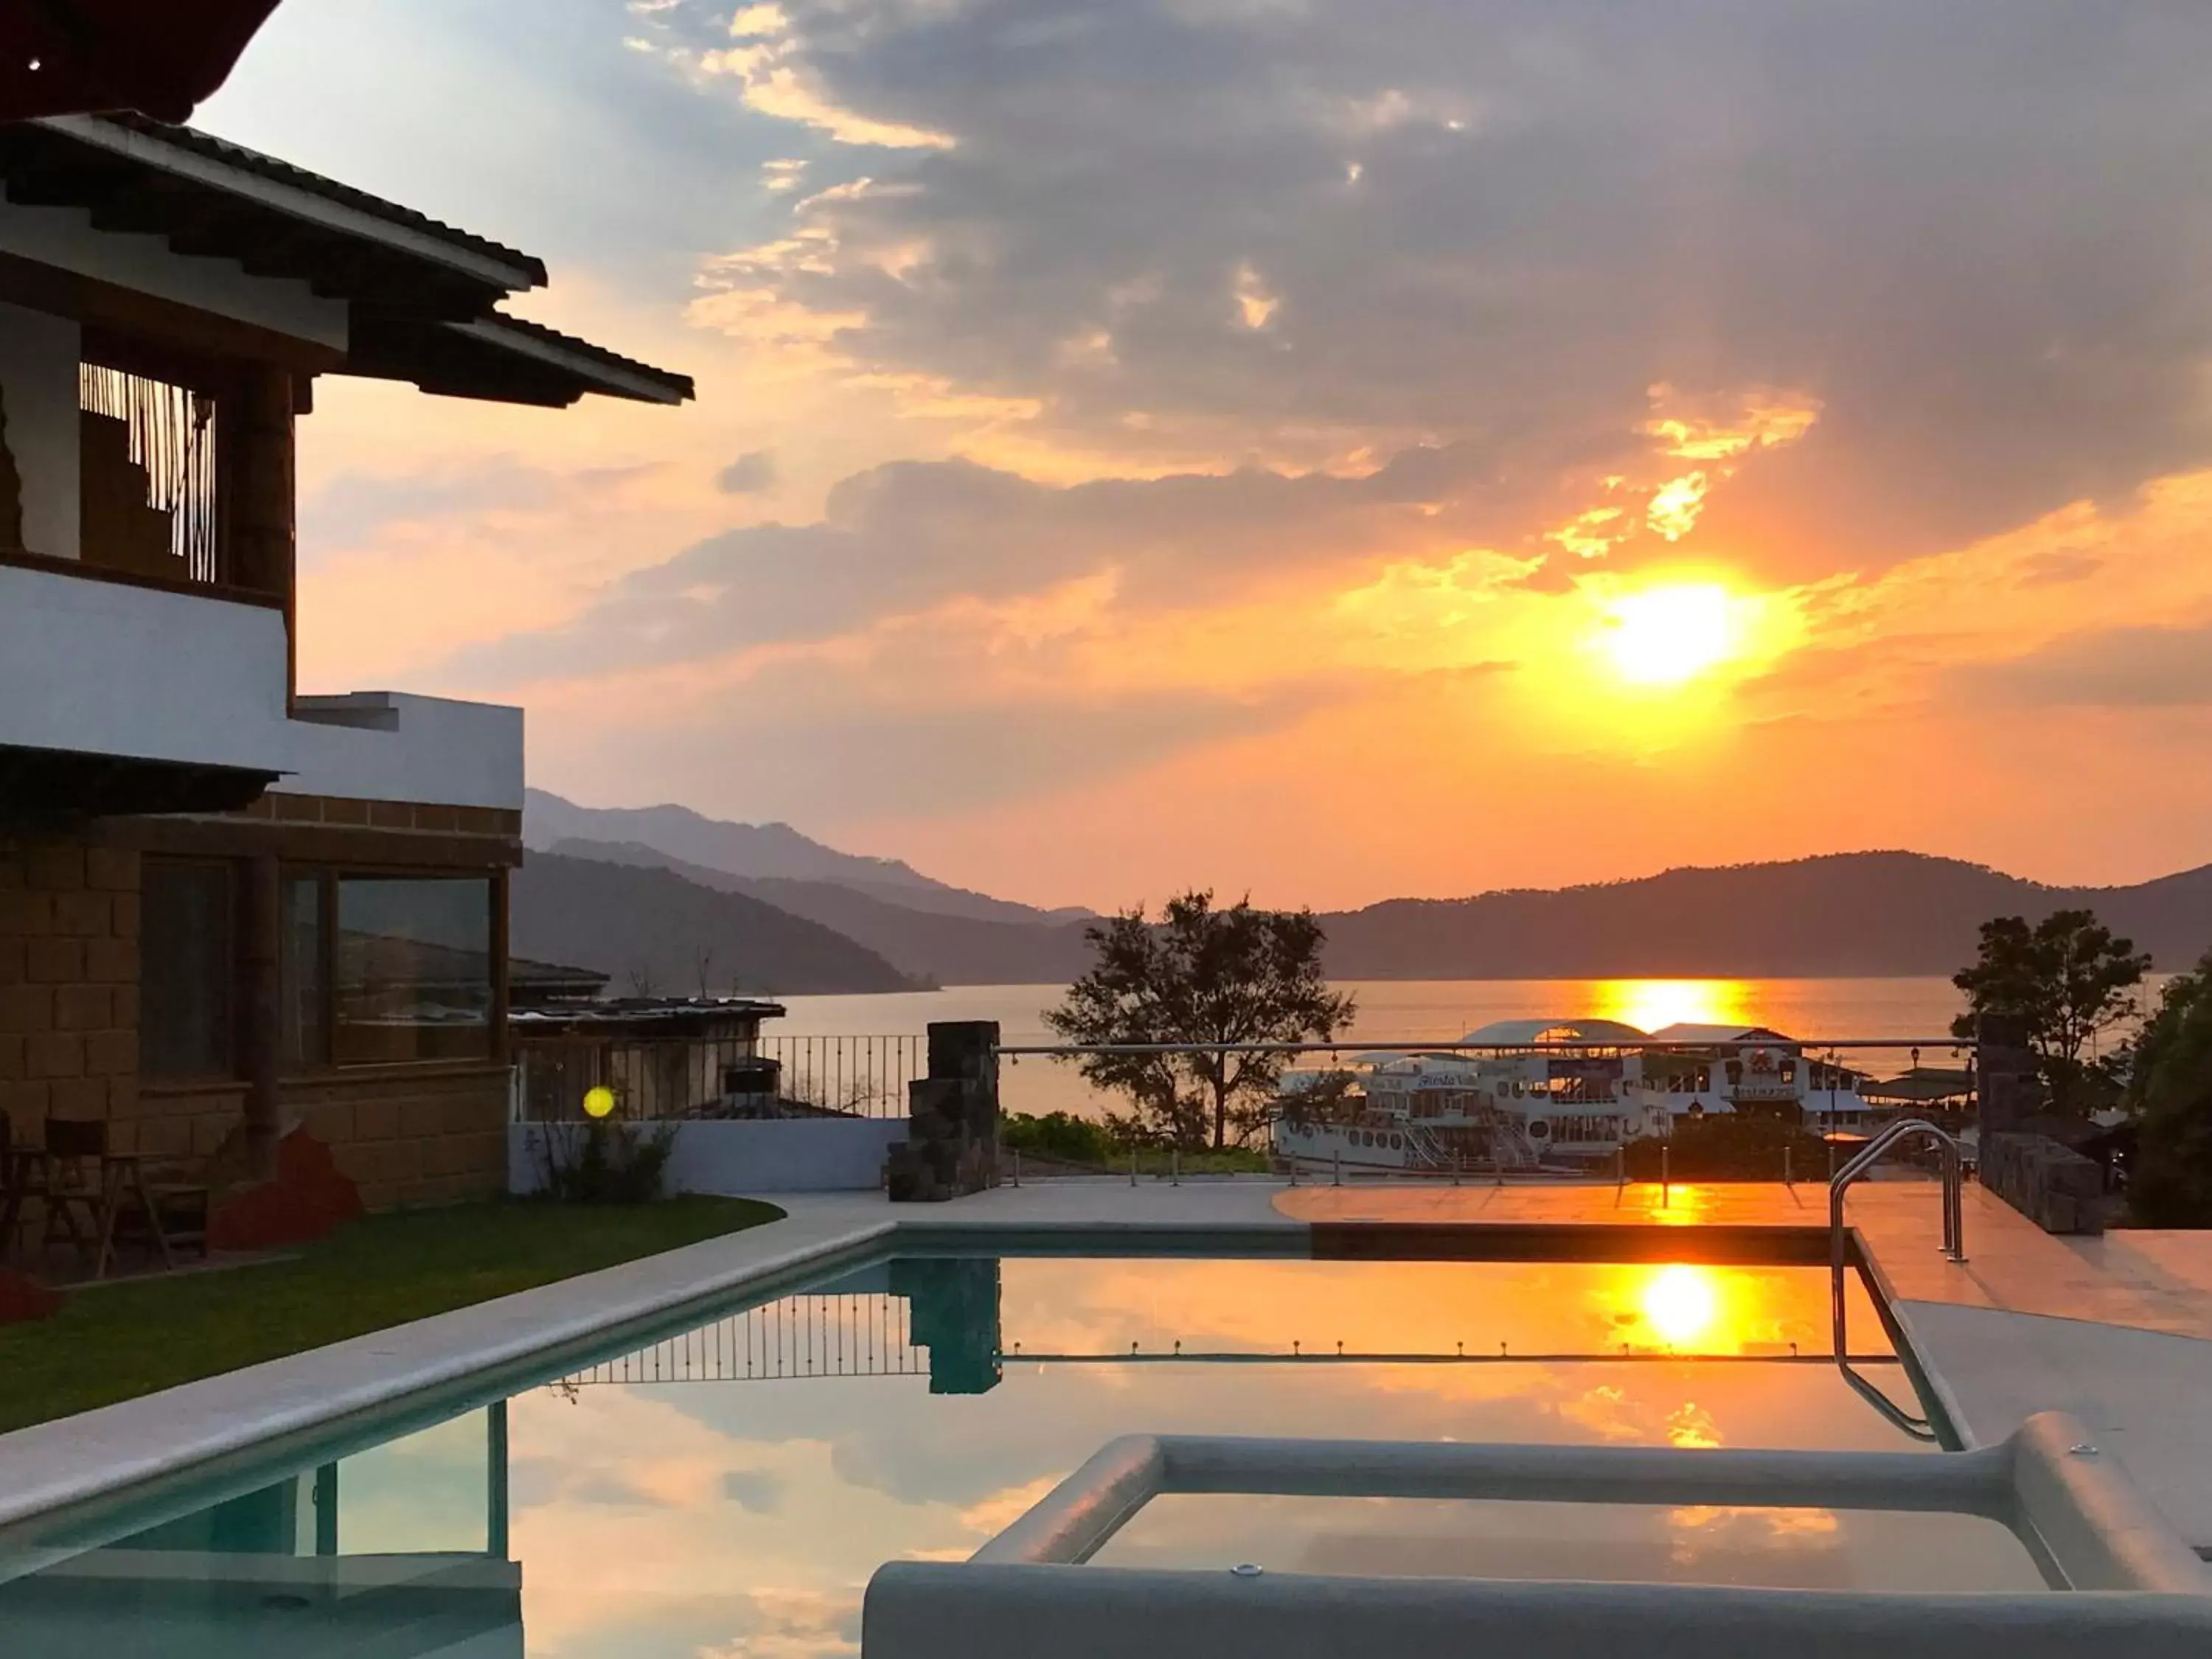 Swimming pool, Sunrise/Sunset in Hotel puesta del sol